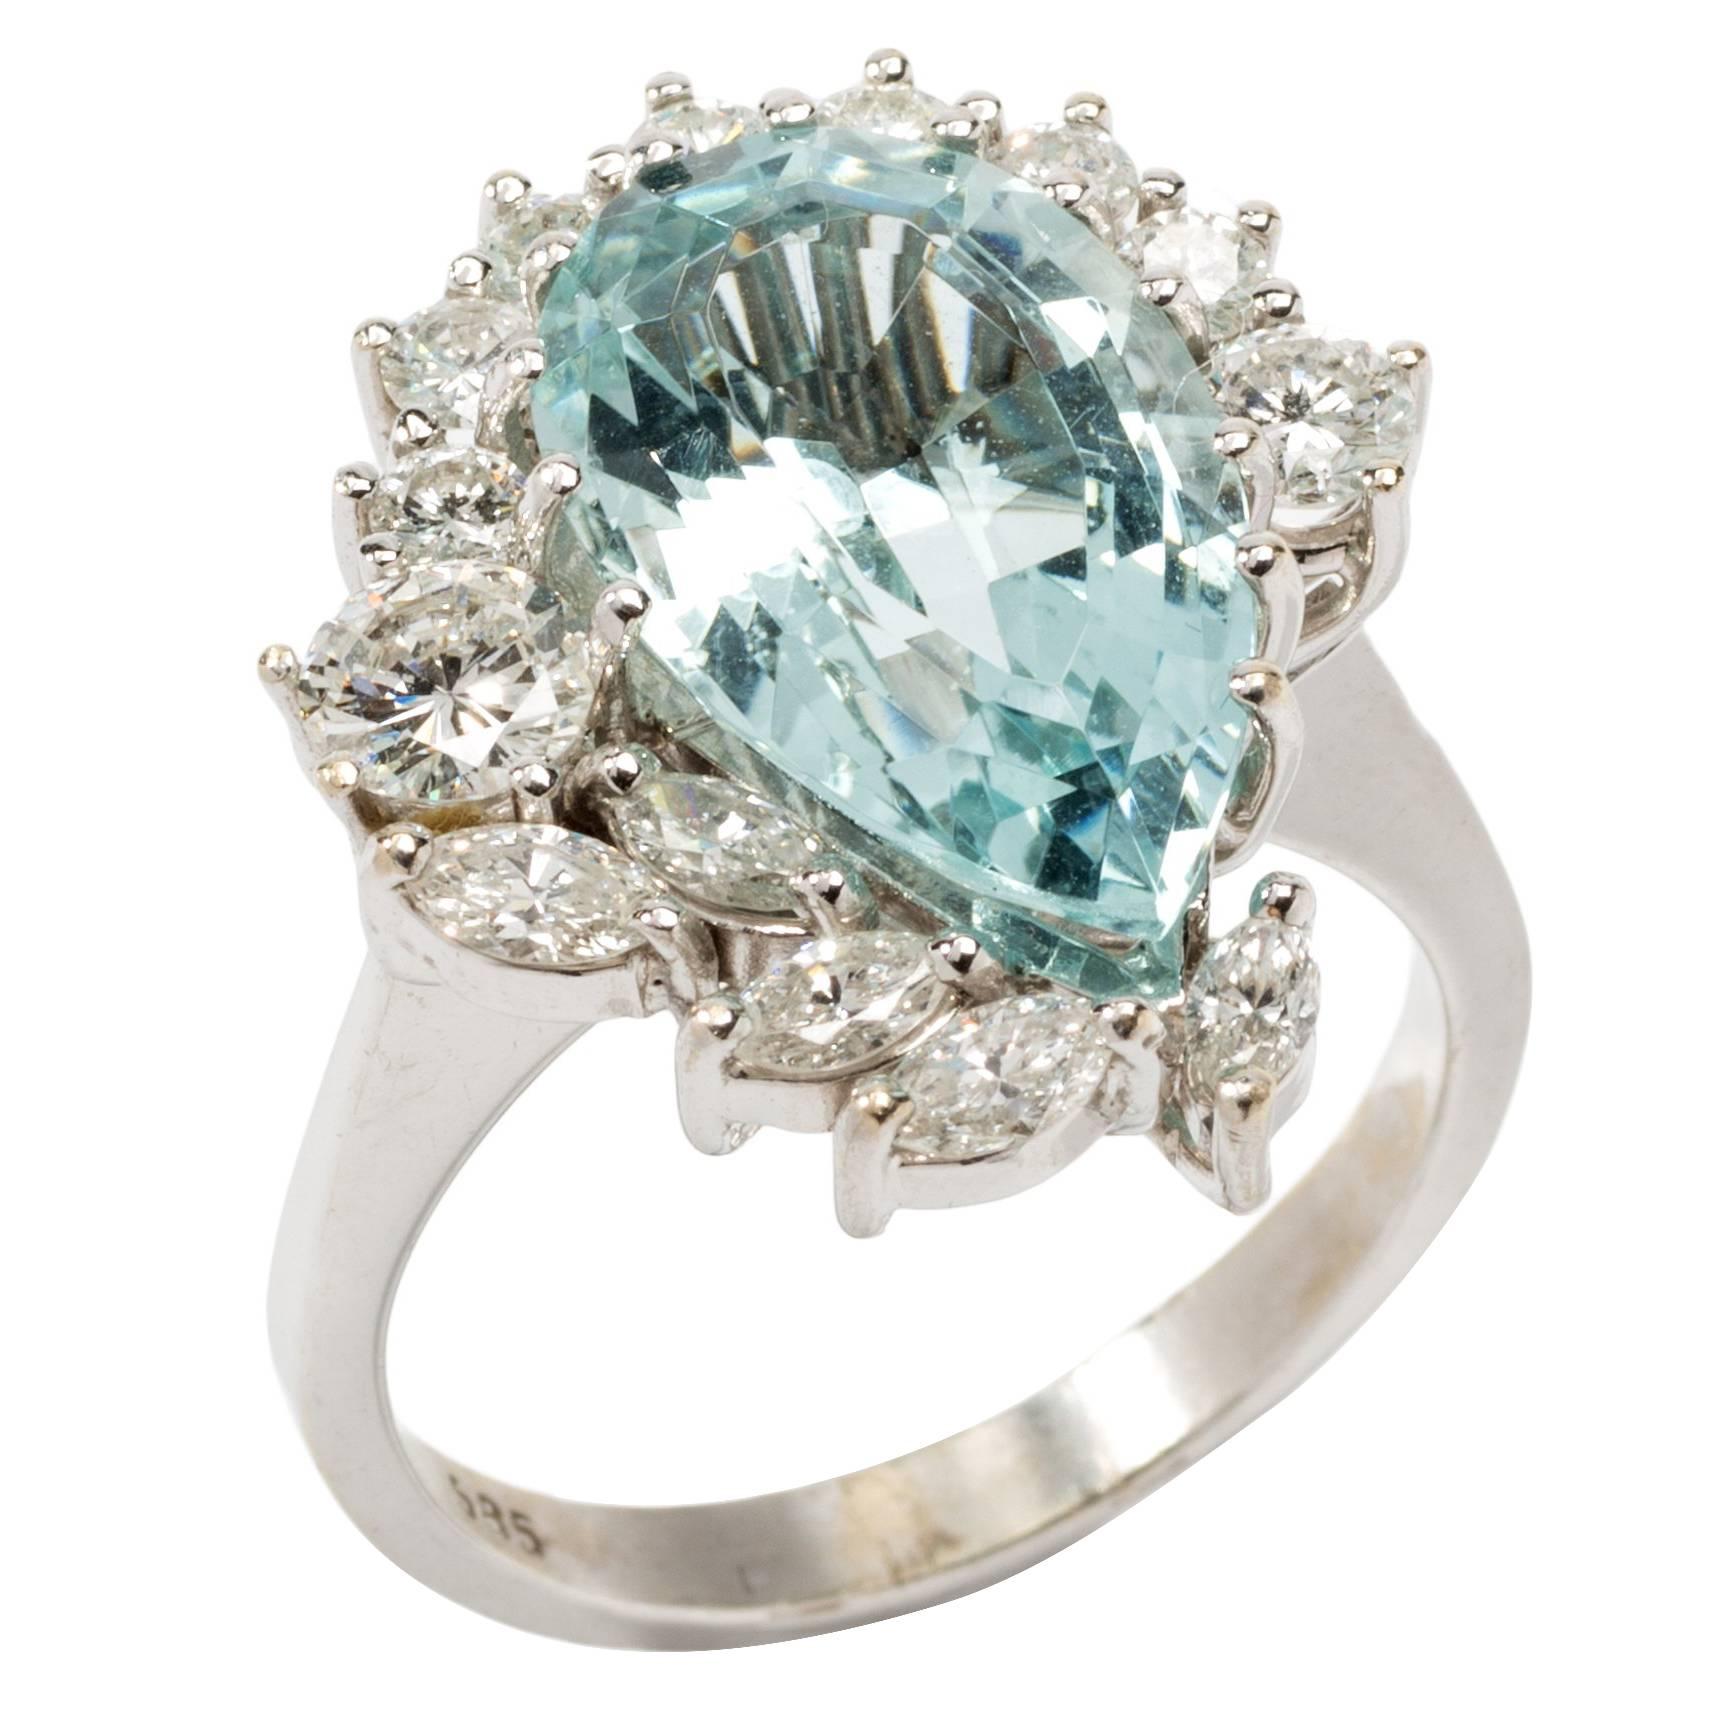 Tear Drop Aquamarine Ring with Diamonds